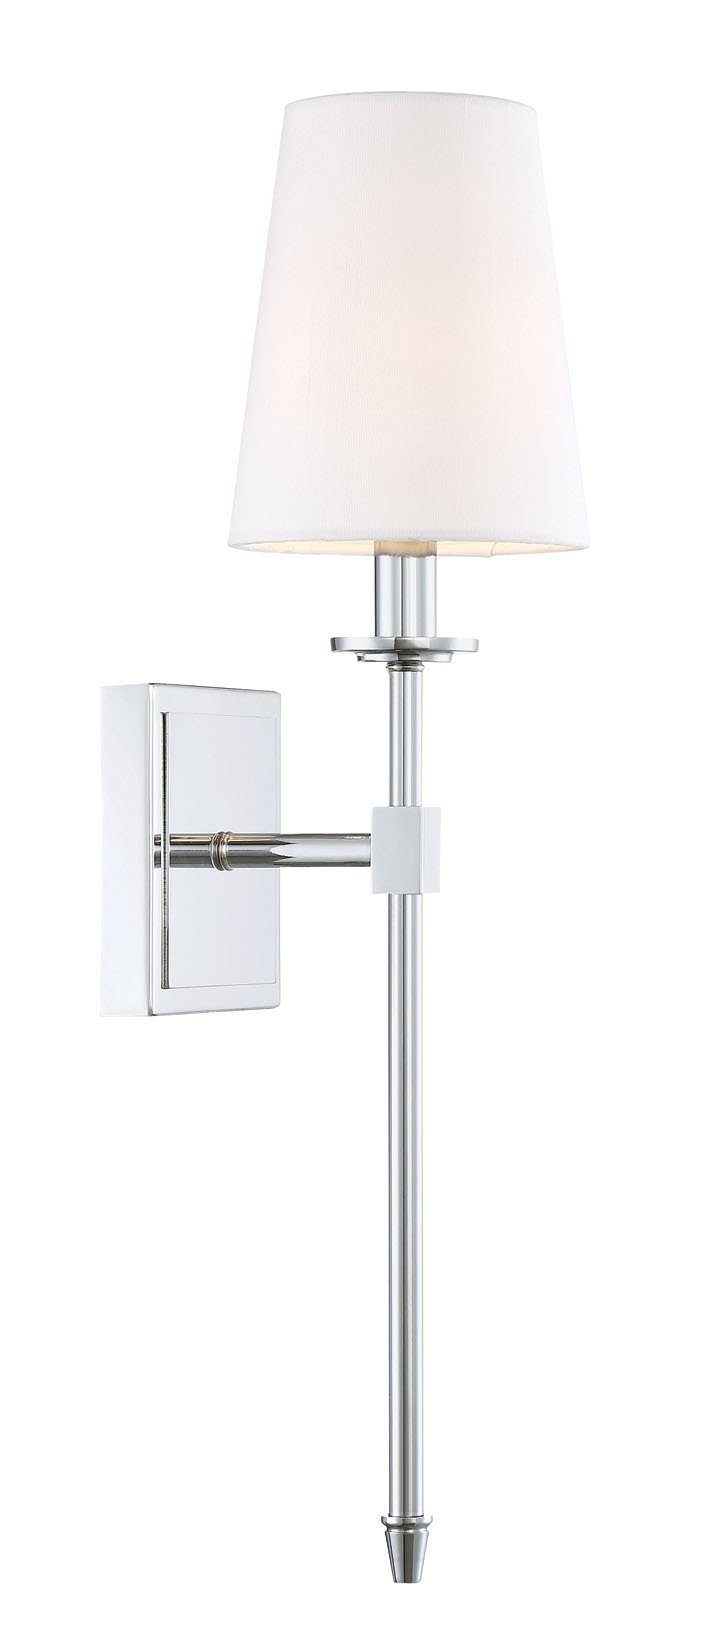 KING SHA Multi Purpose Spotlight Desk Wall Mount Accent Lamp with Plug in Cord White Finish 